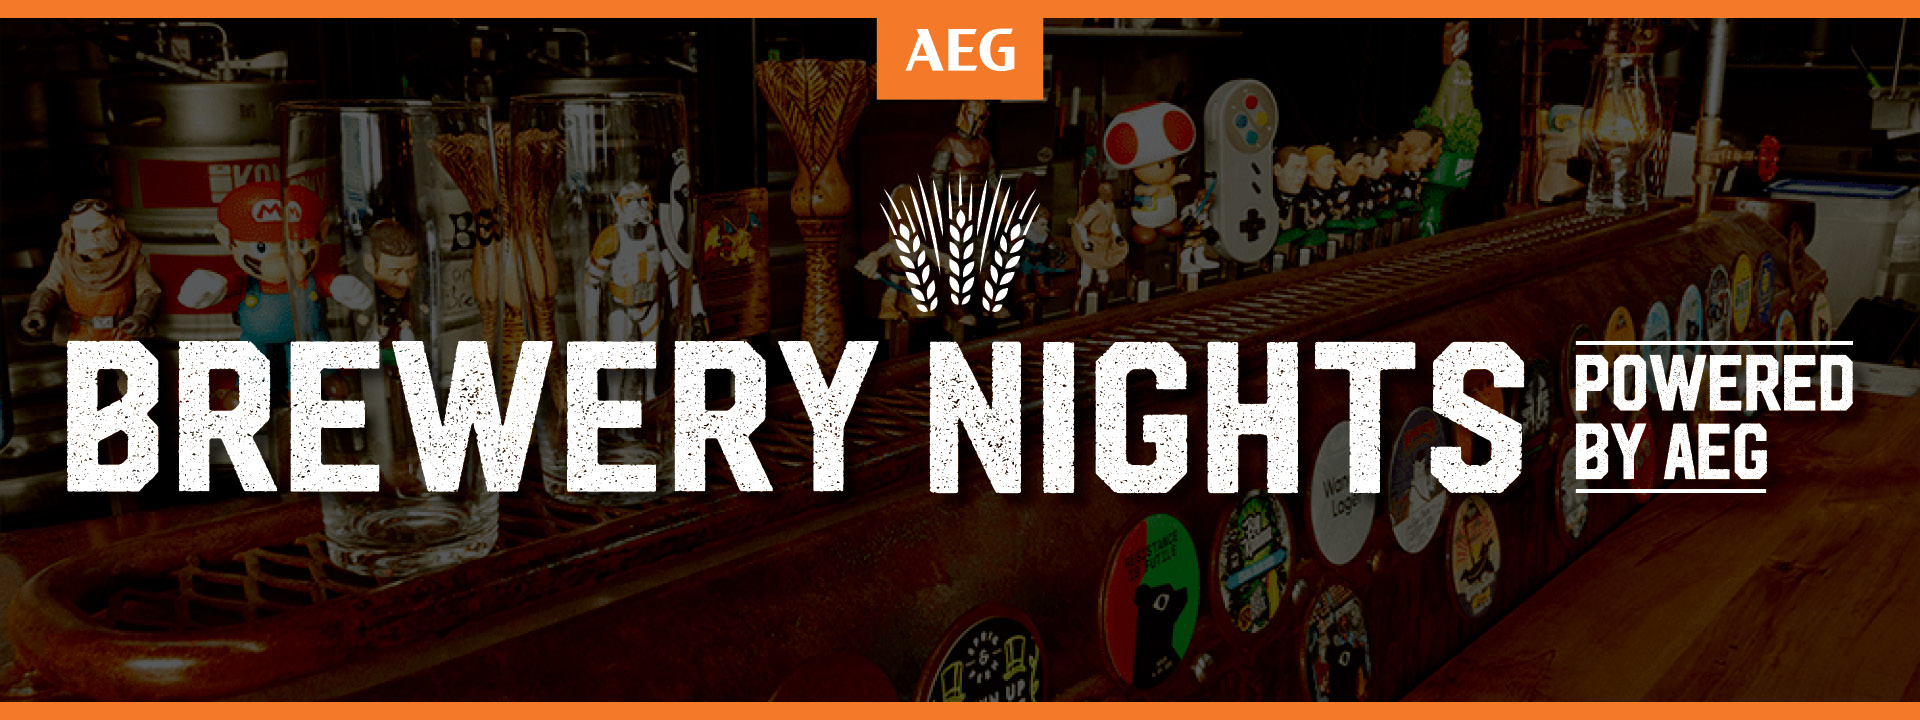 Brewery Nights powered by AEG